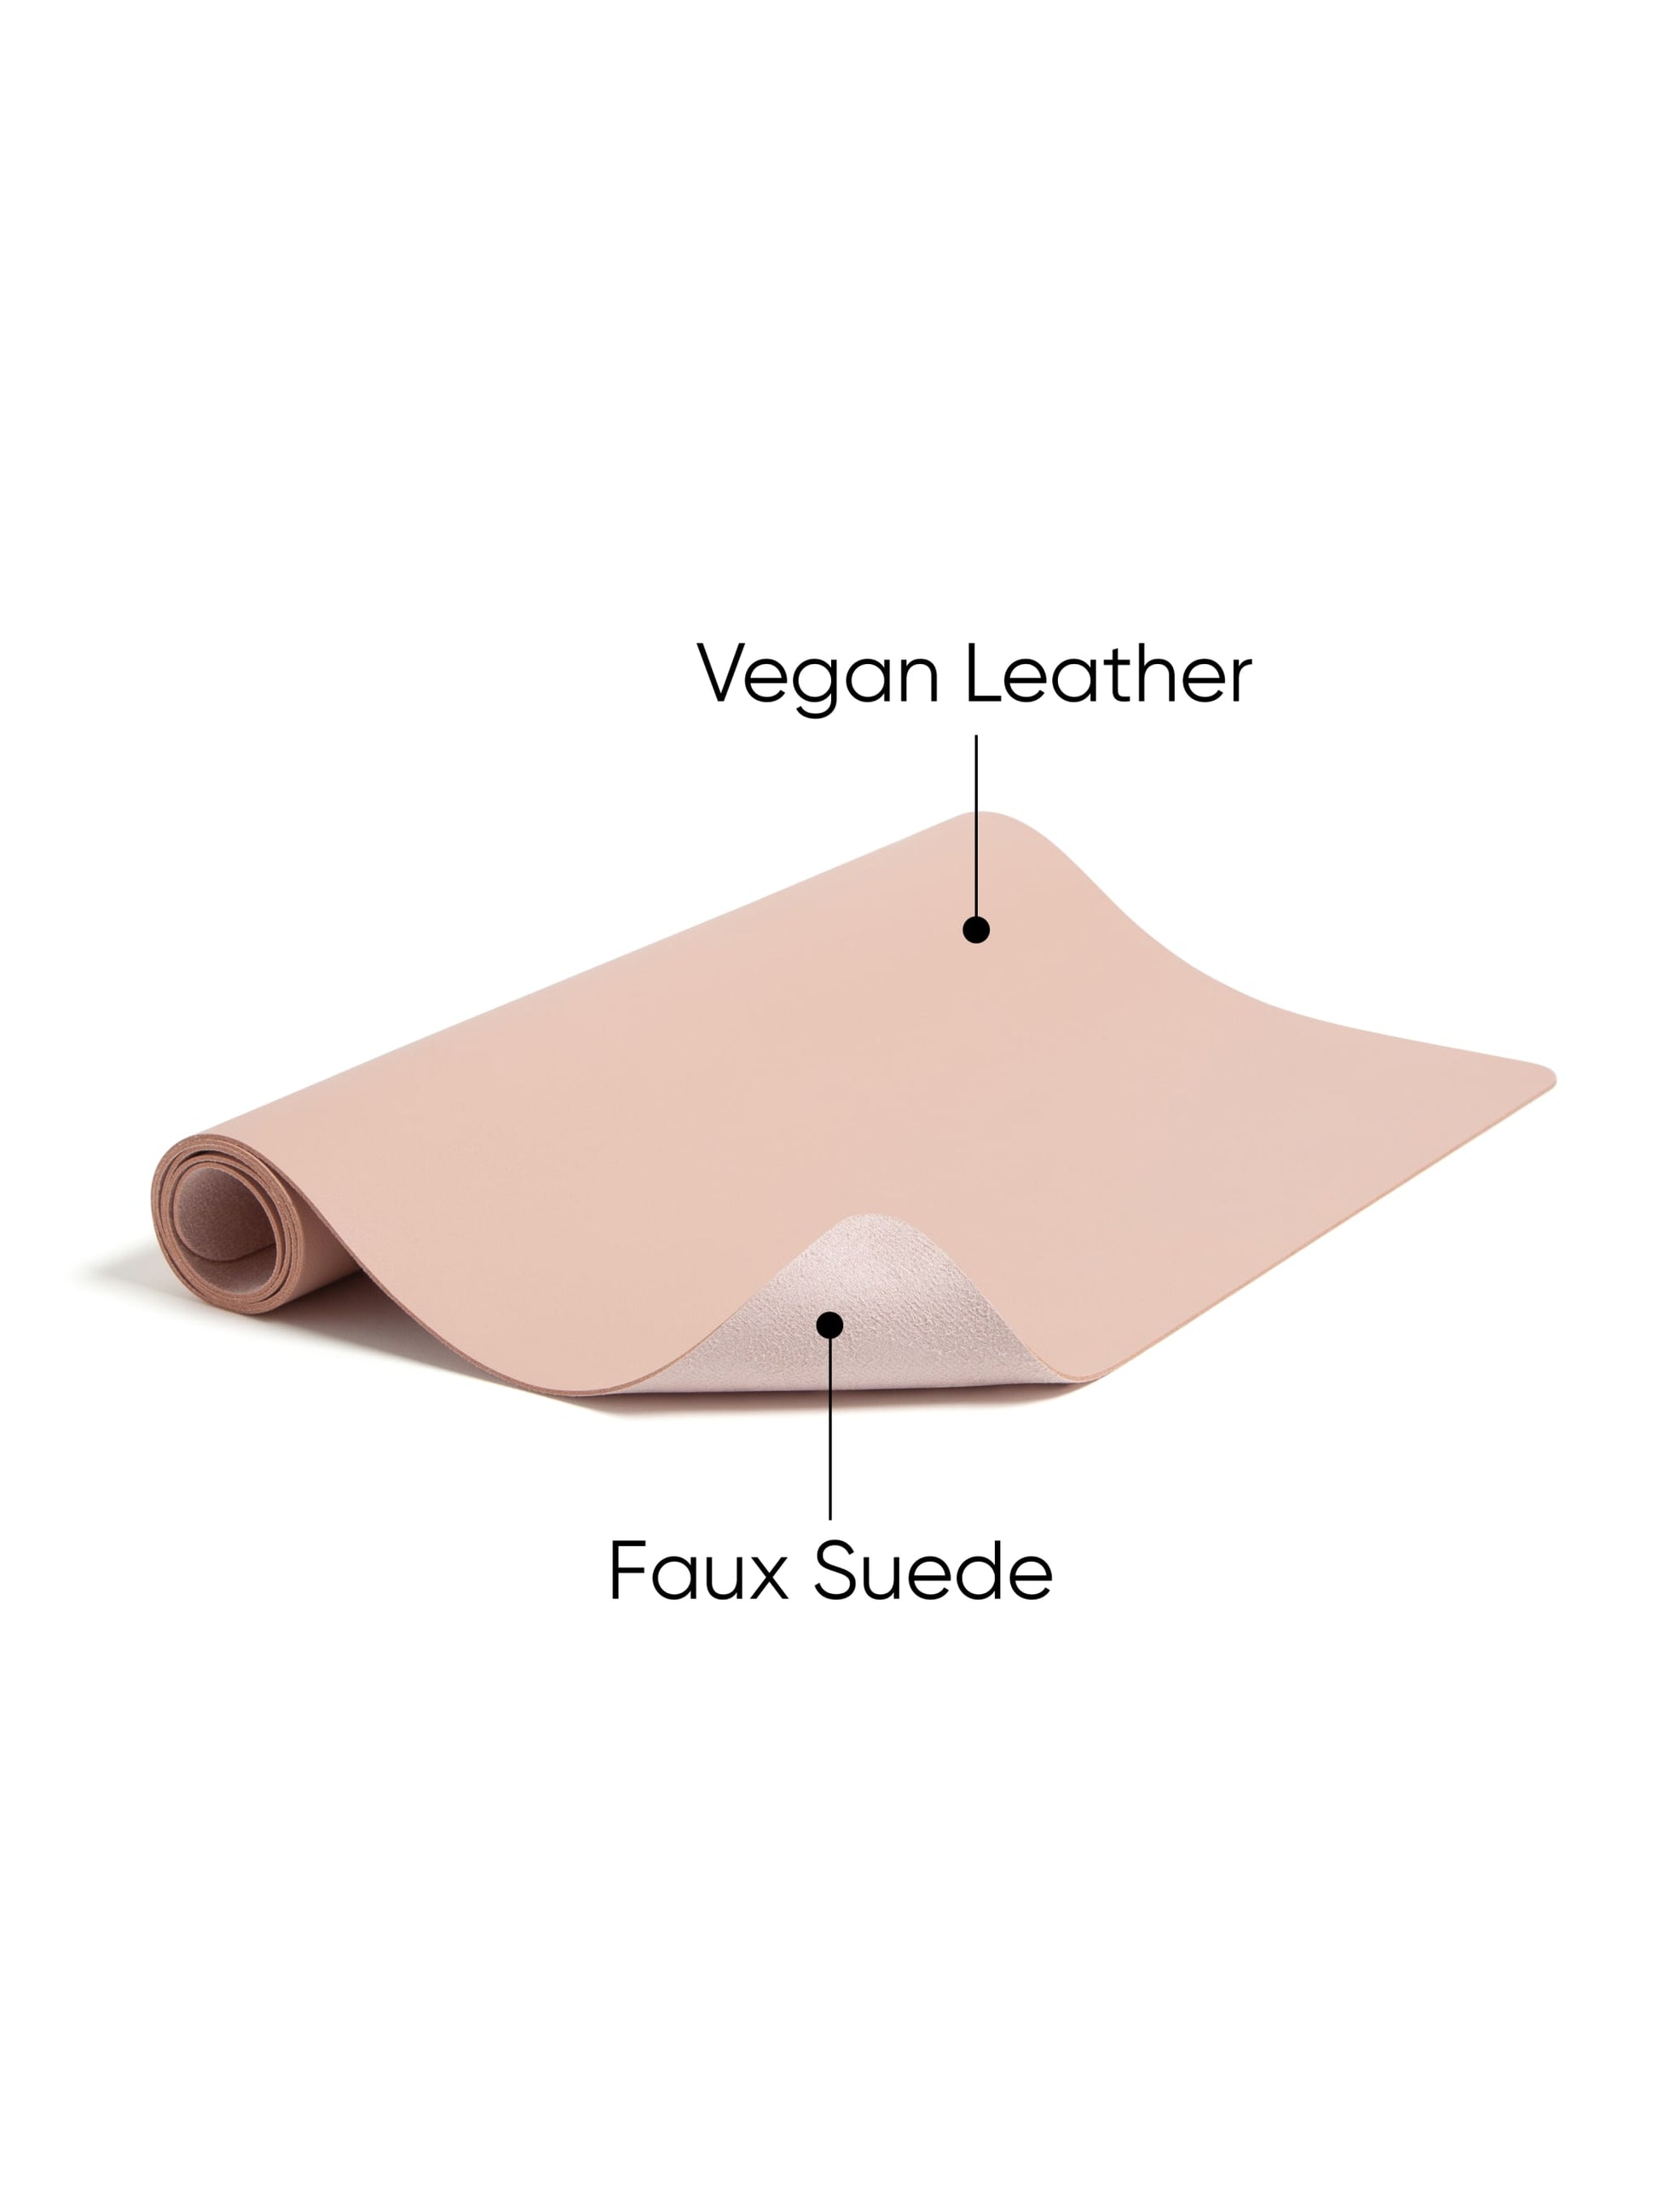 Vegan Leather Desk Pad, Dusty Rose Color, 36"X17" Size, 086486648295